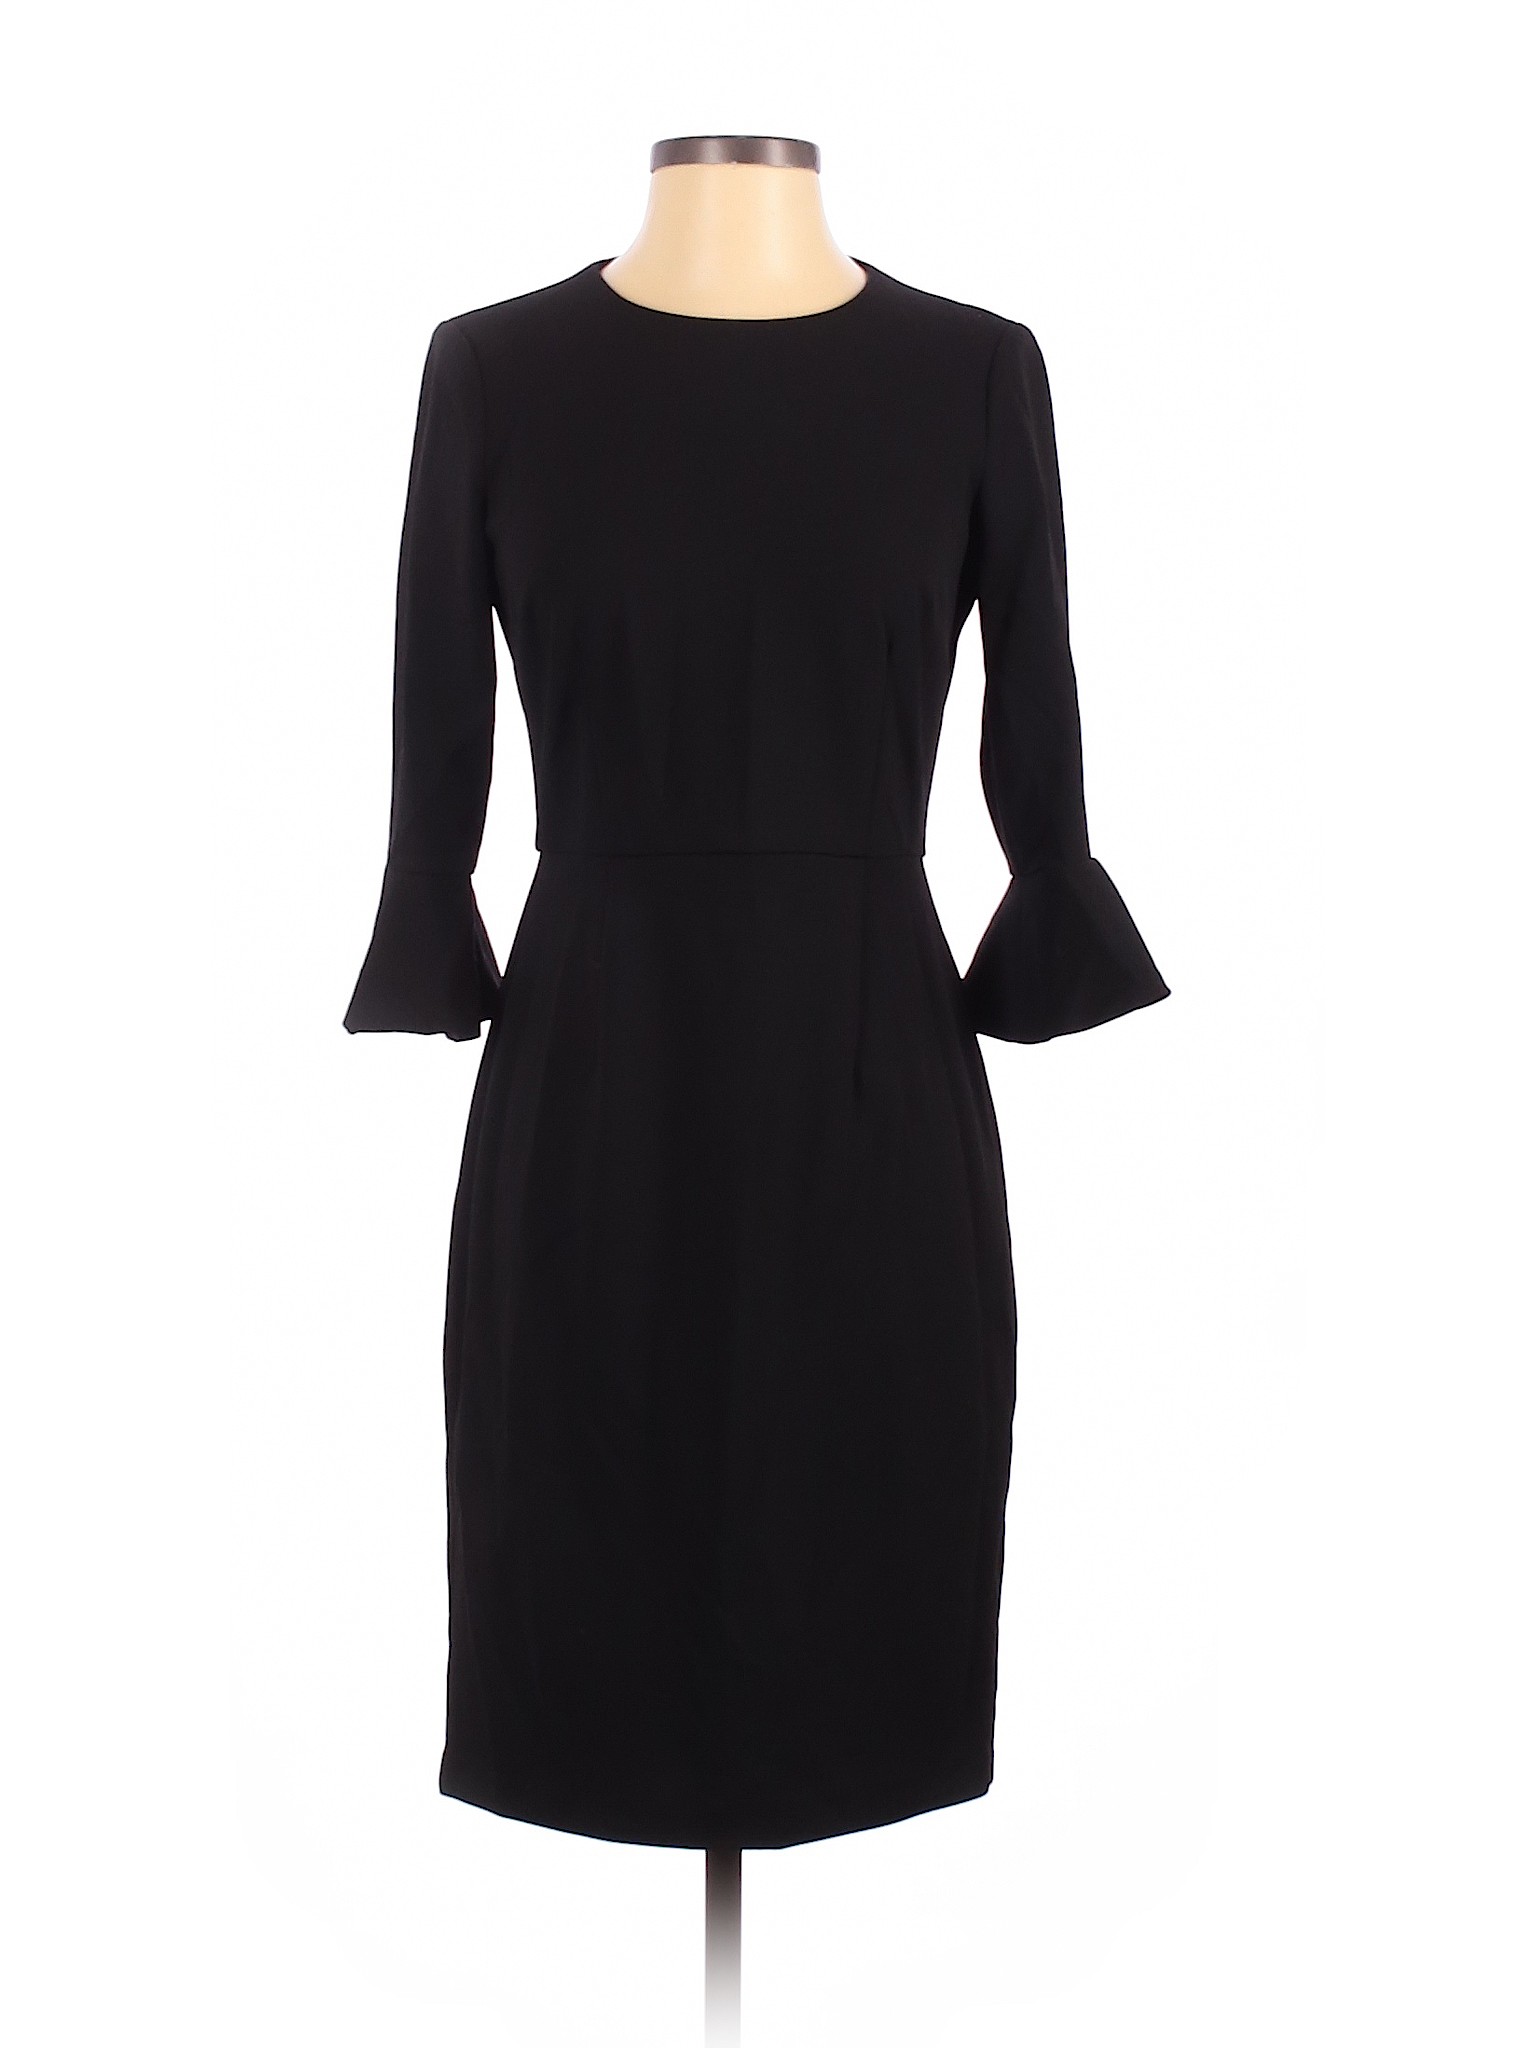 Donna Morgan Women Black Cocktail Dress 2 | eBay